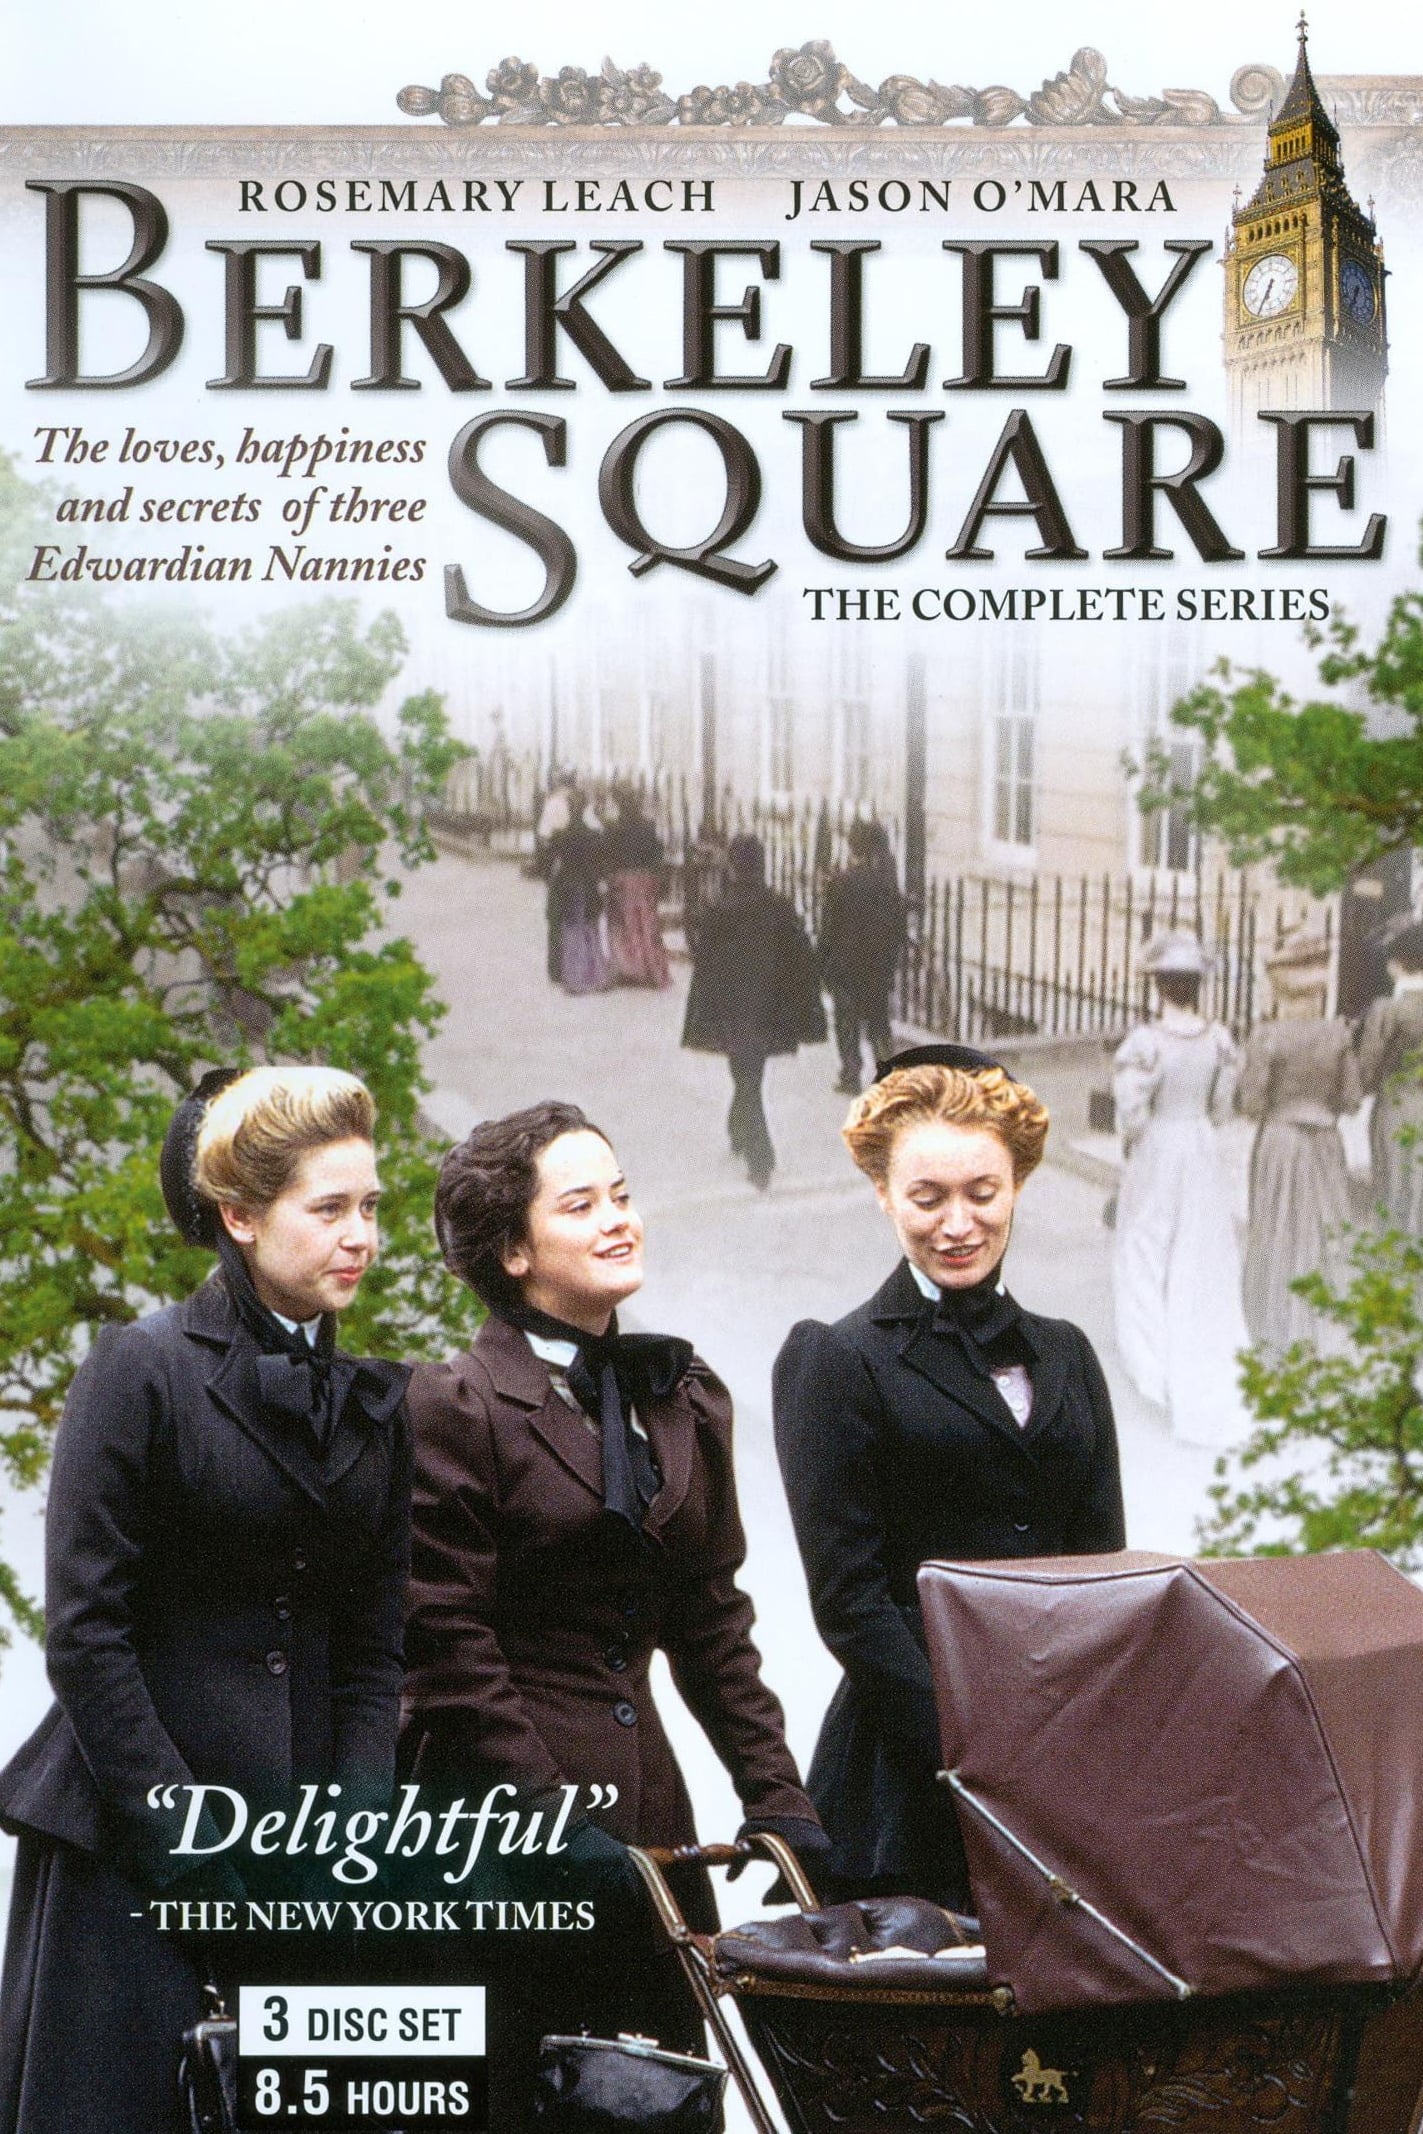 Berkeley Square (1998)